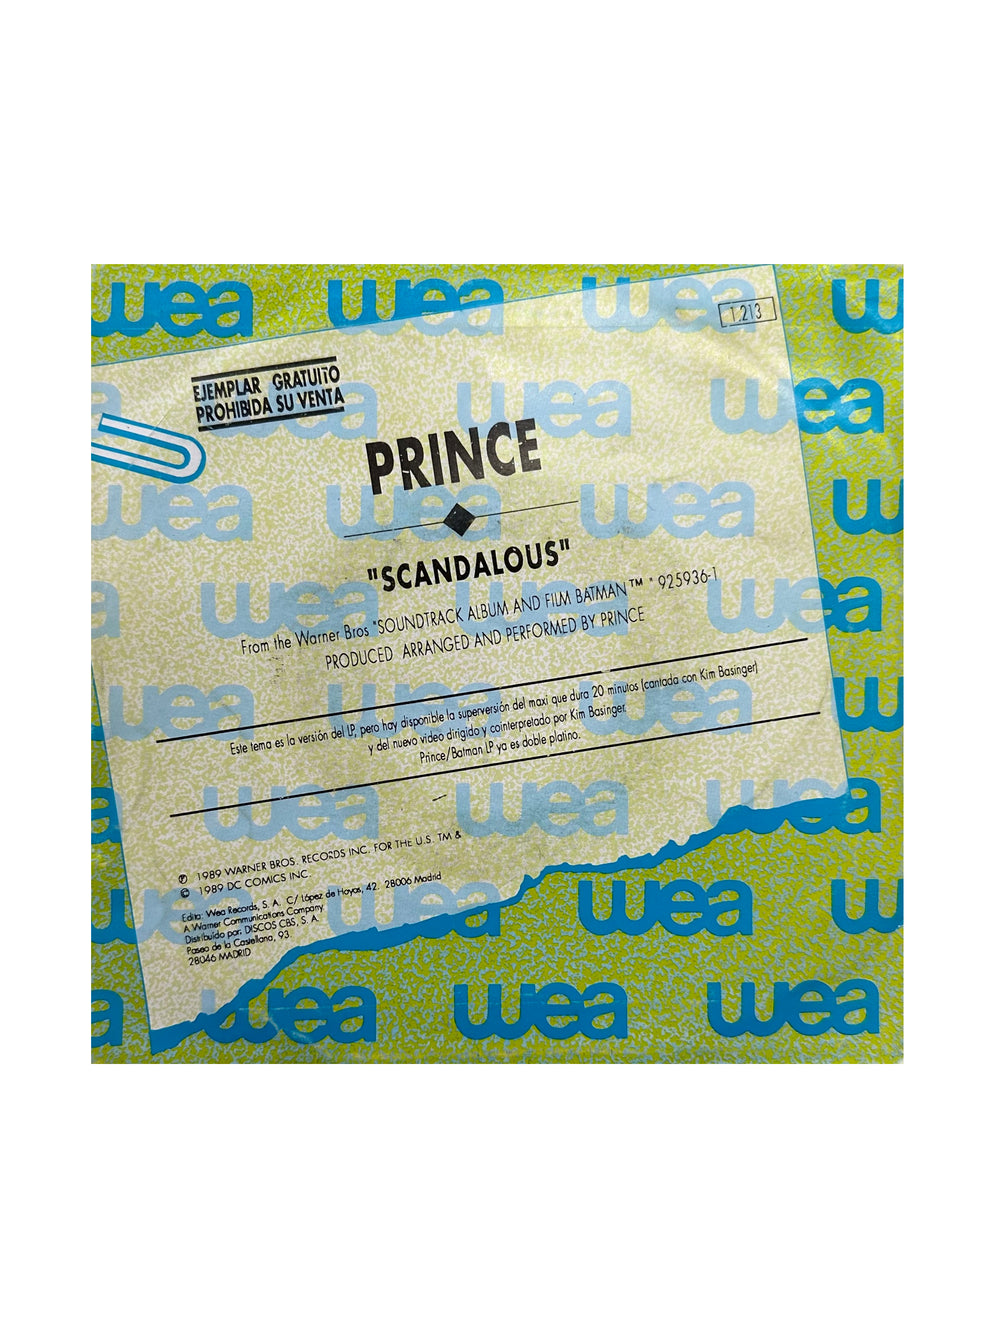 Prince – Scandalous Vinyl 7" Single Promotional Spanish Preloved: 1989